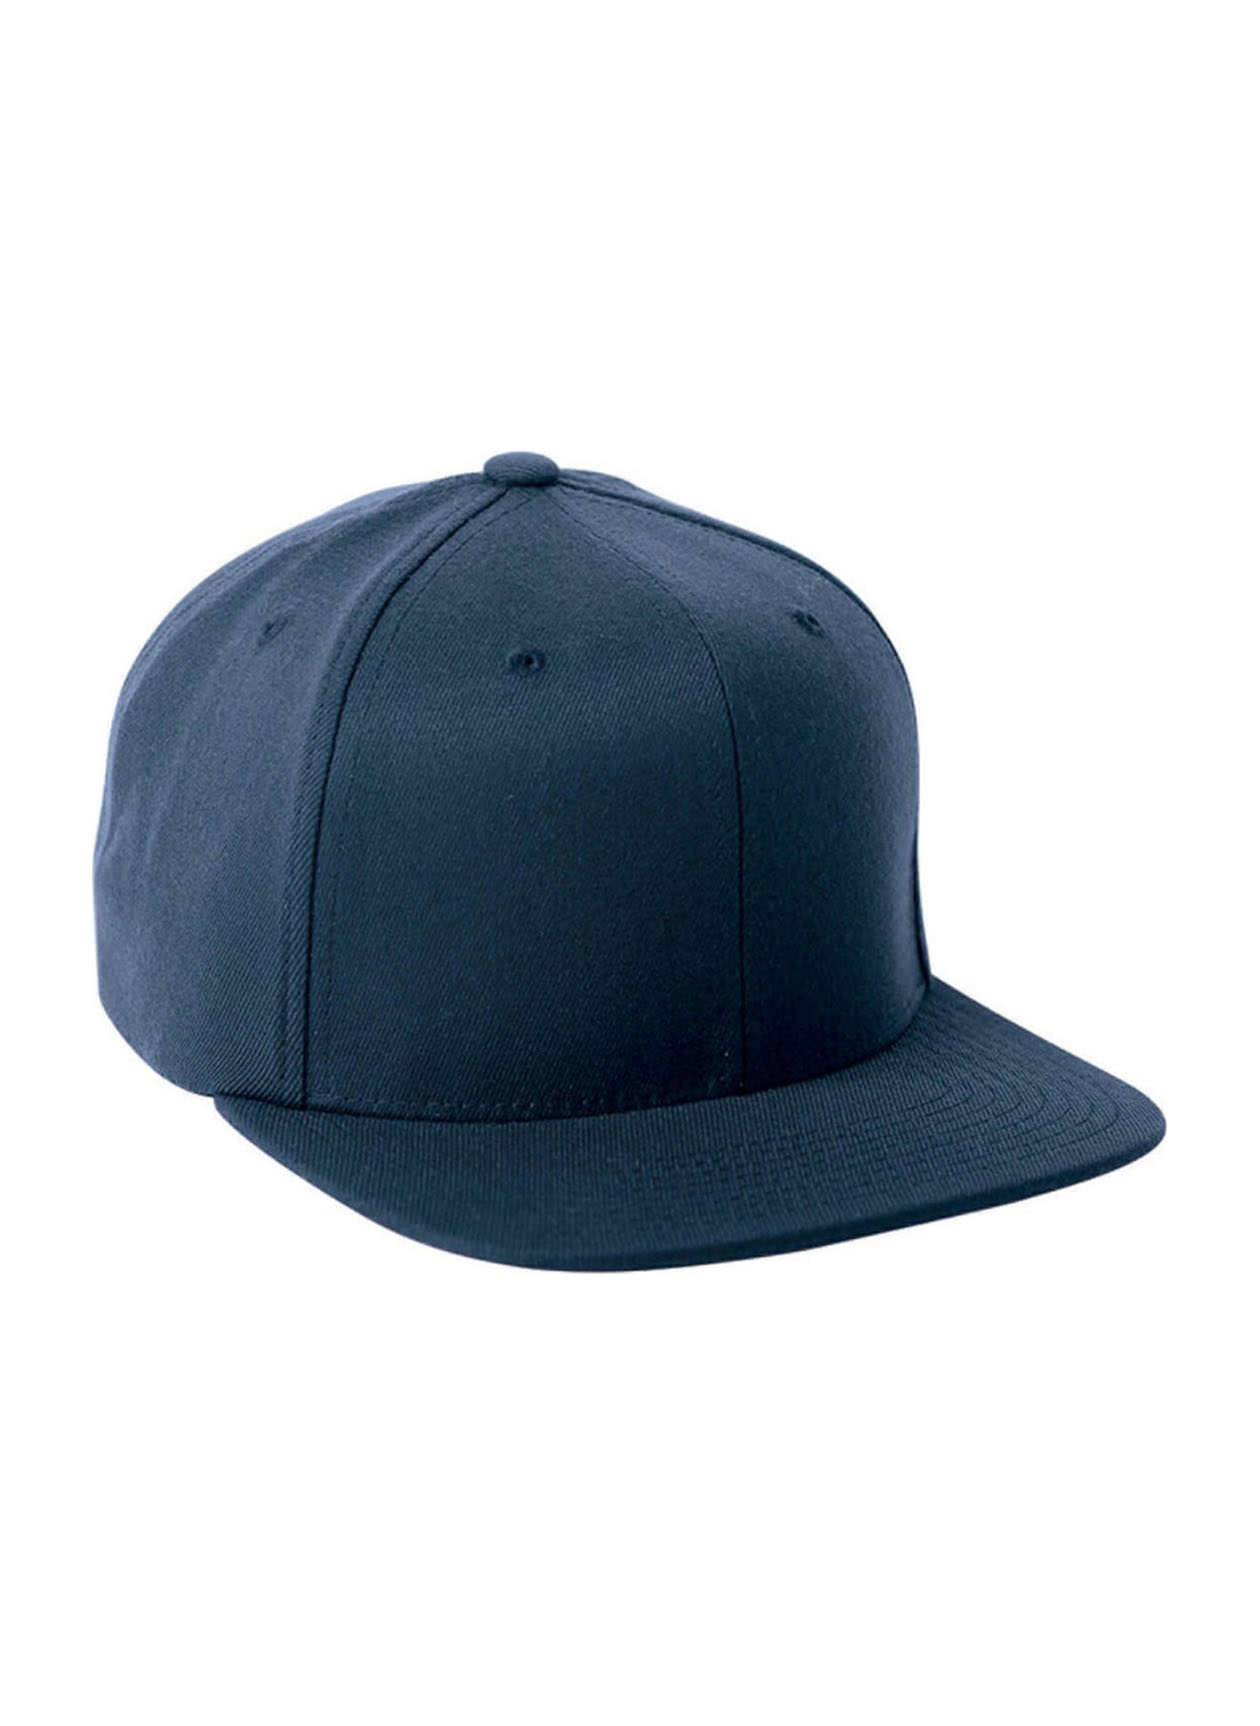 Flexfit Navy Wool Blend Snapback Hat